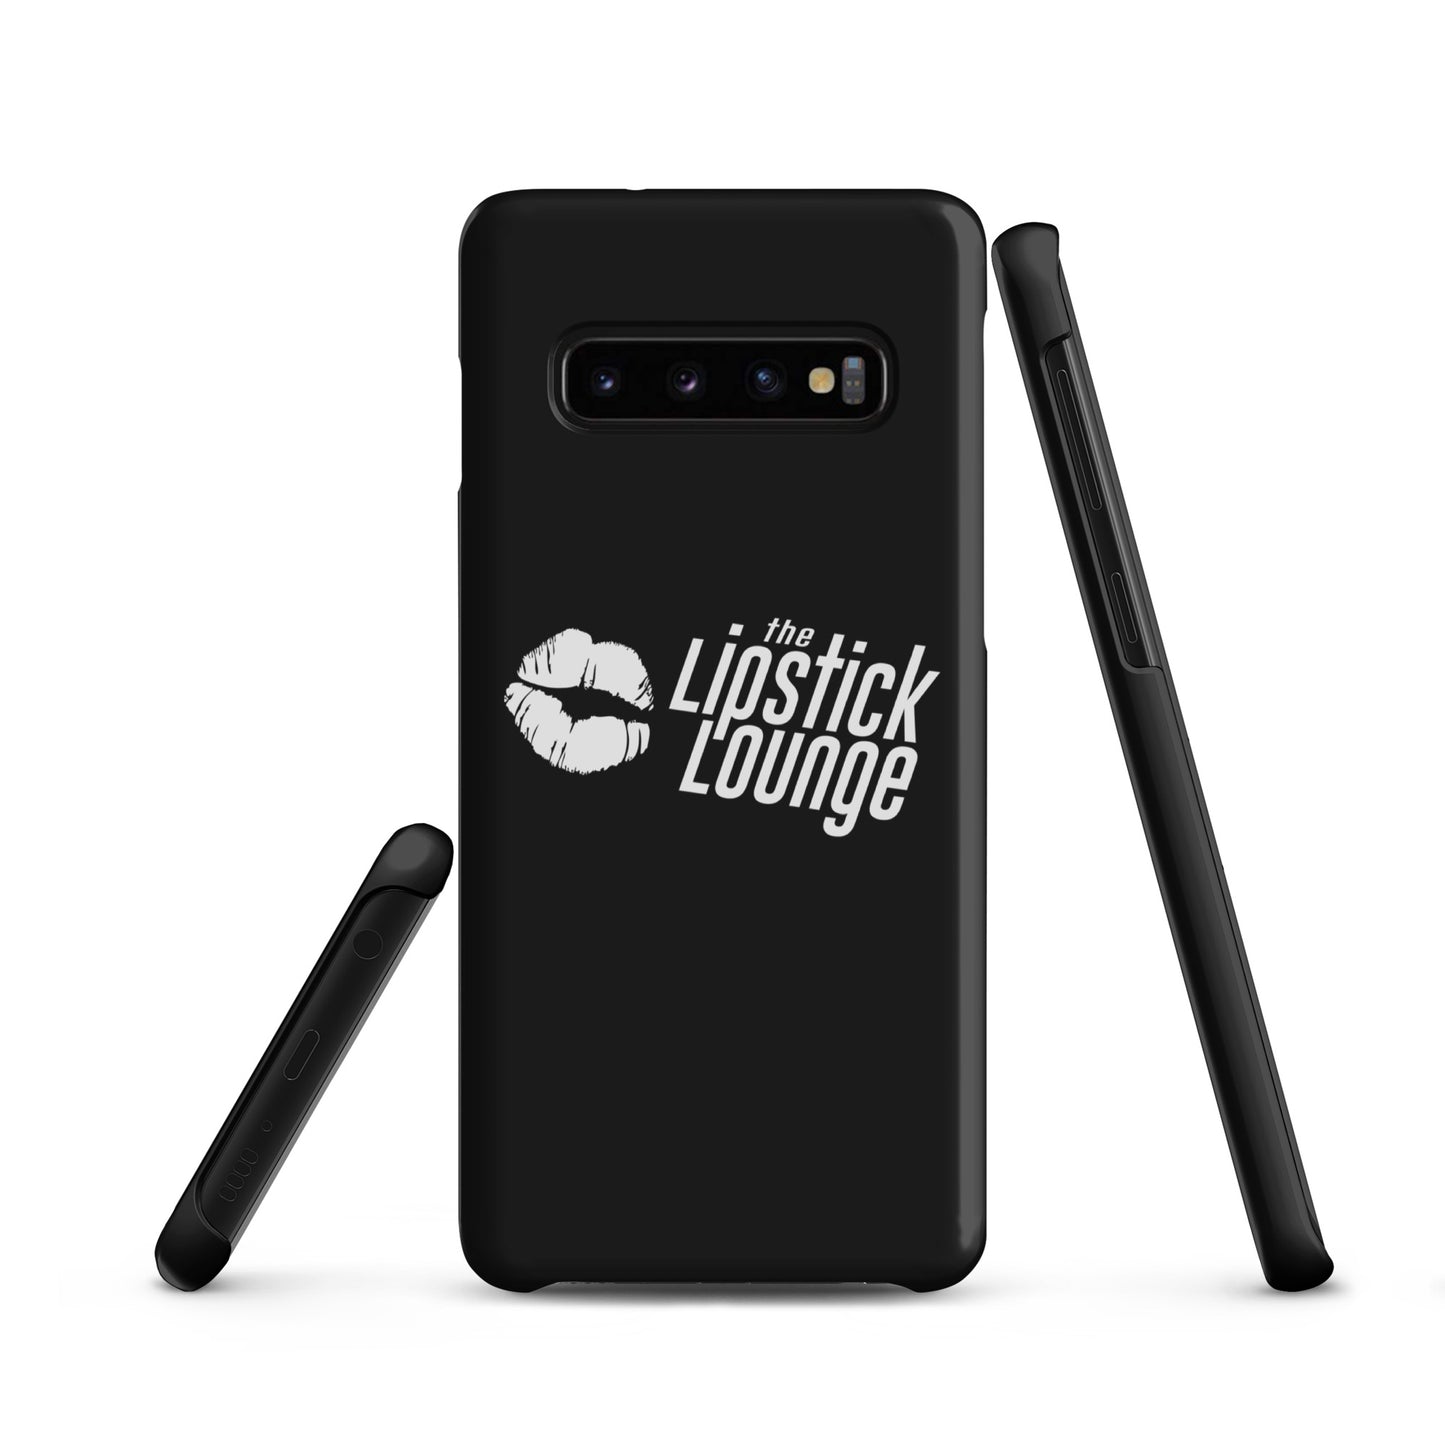 Lipstick Lounge White Logo Phone Case for Samsung